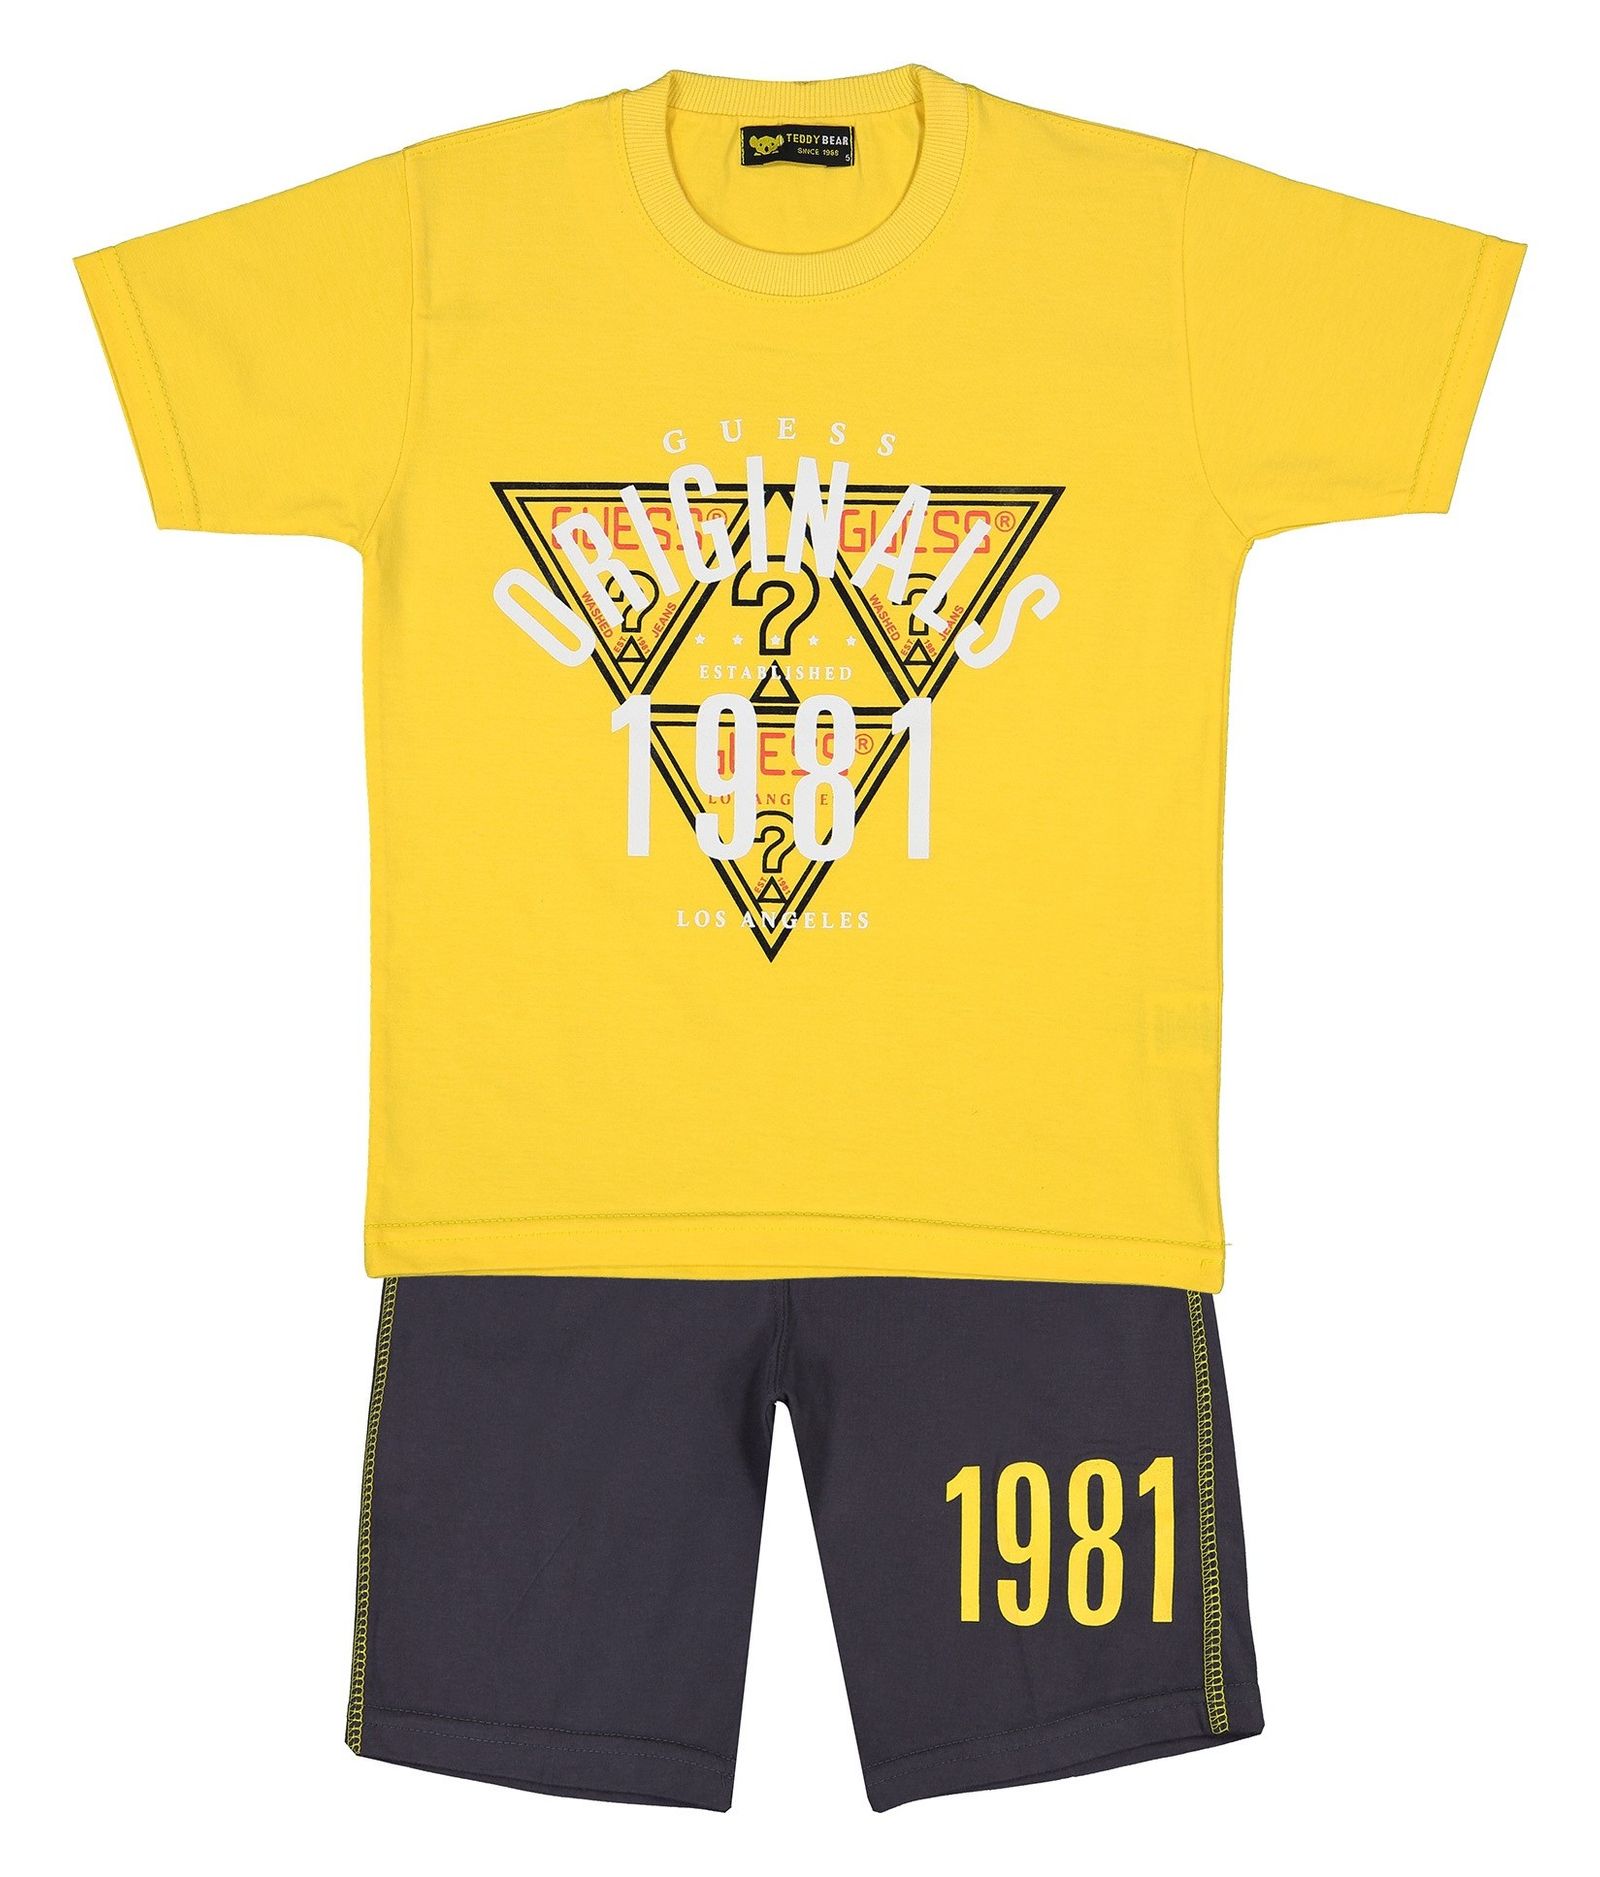 تی شرت و شلوارک نخی پسرانه 1981 - خرس کوچولو - زرد / سرمه اي - 2